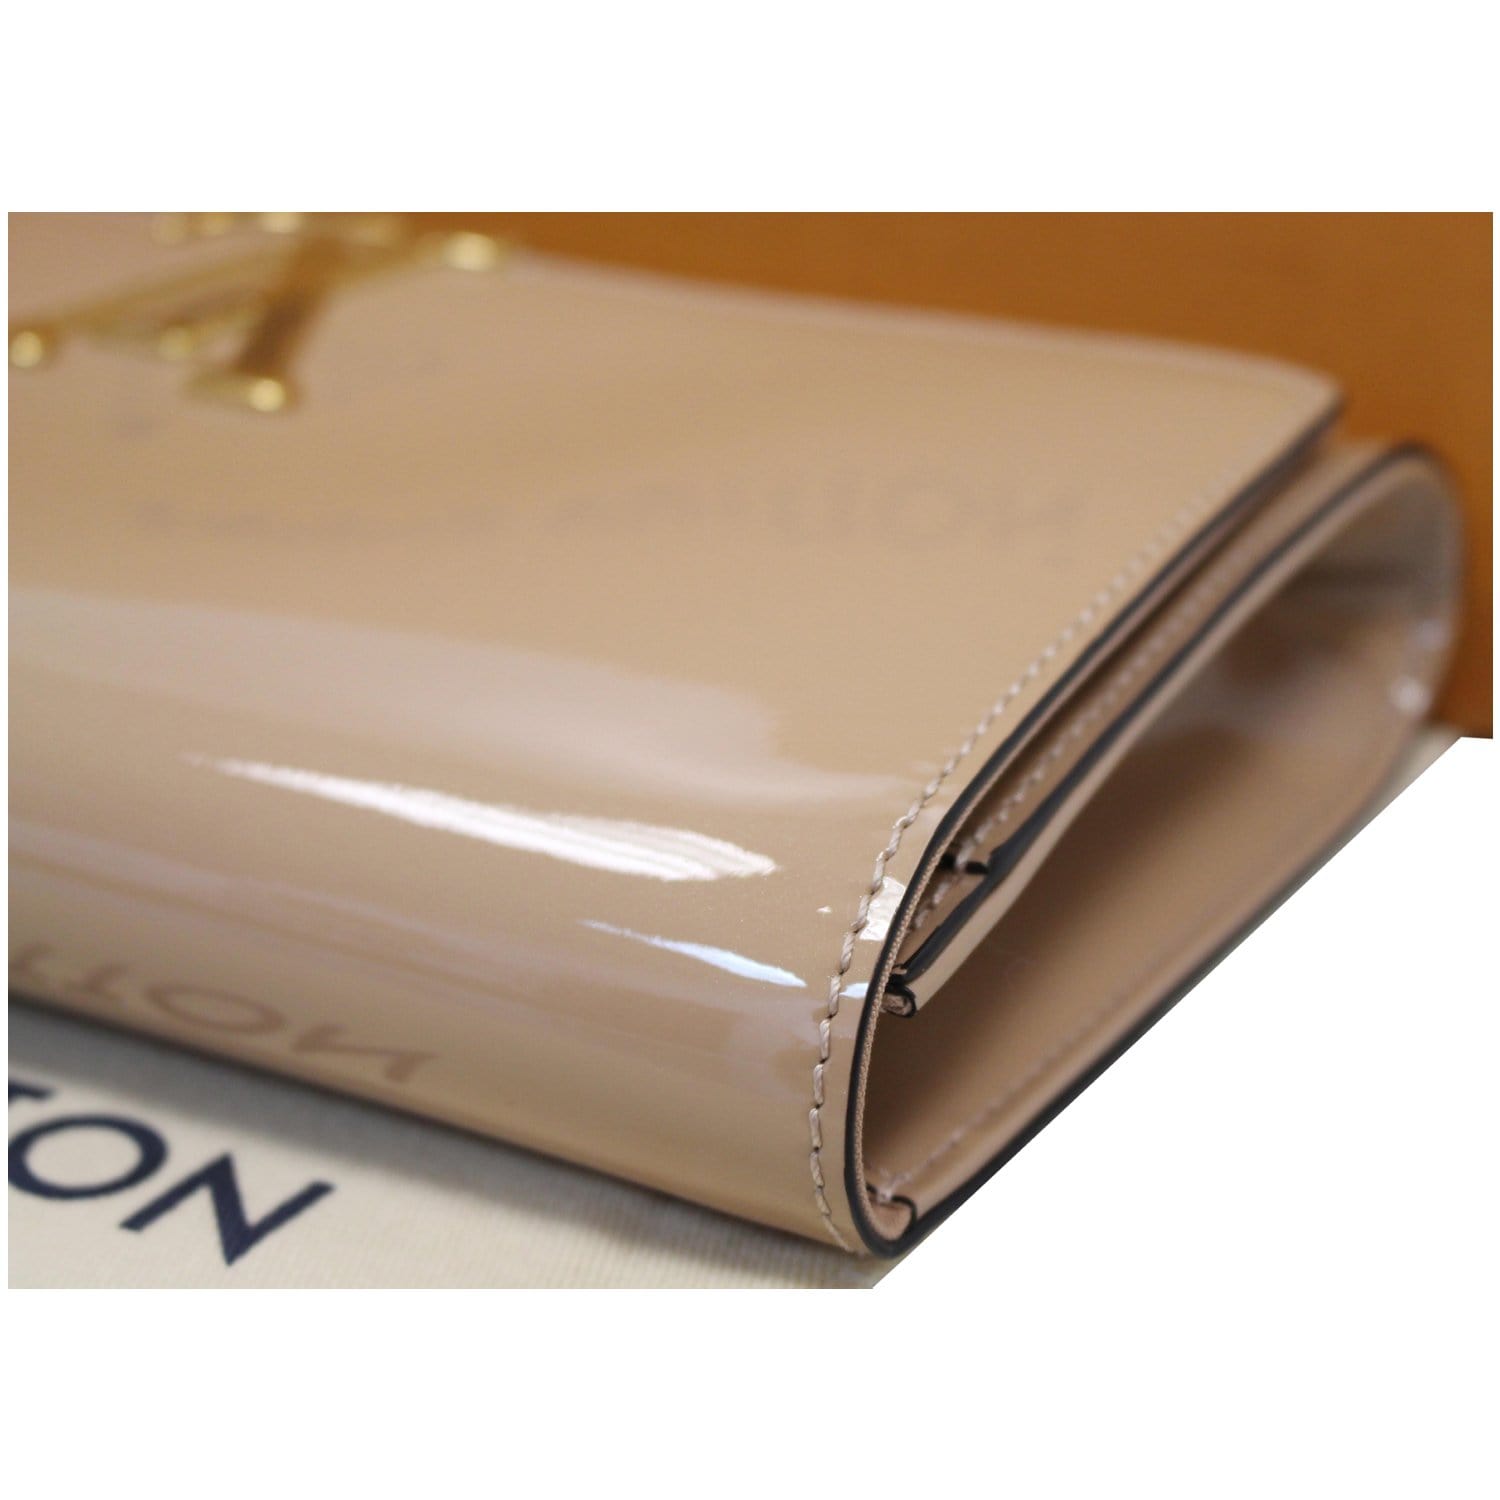 Louis Vuitton Patent Leather Continental Wallet - Neutrals Wallets,  Accessories - LOU816580